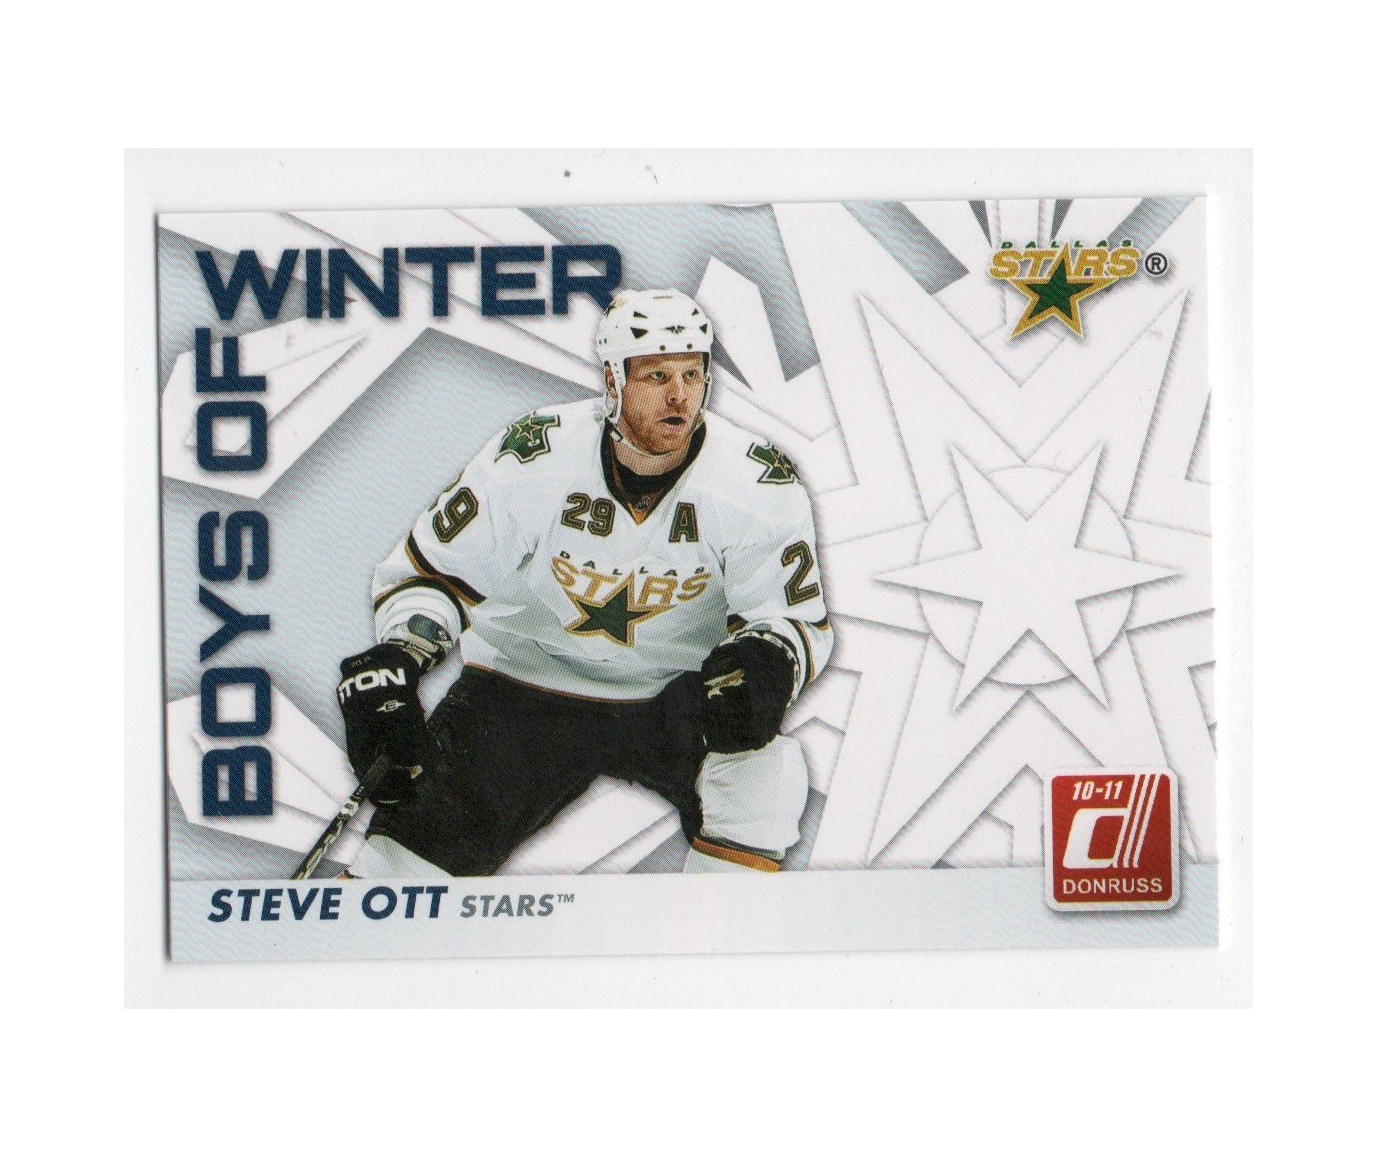 2010-11 Donruss Boys of Winter #53 Steve Ott (12-X158-NHLSTARS)